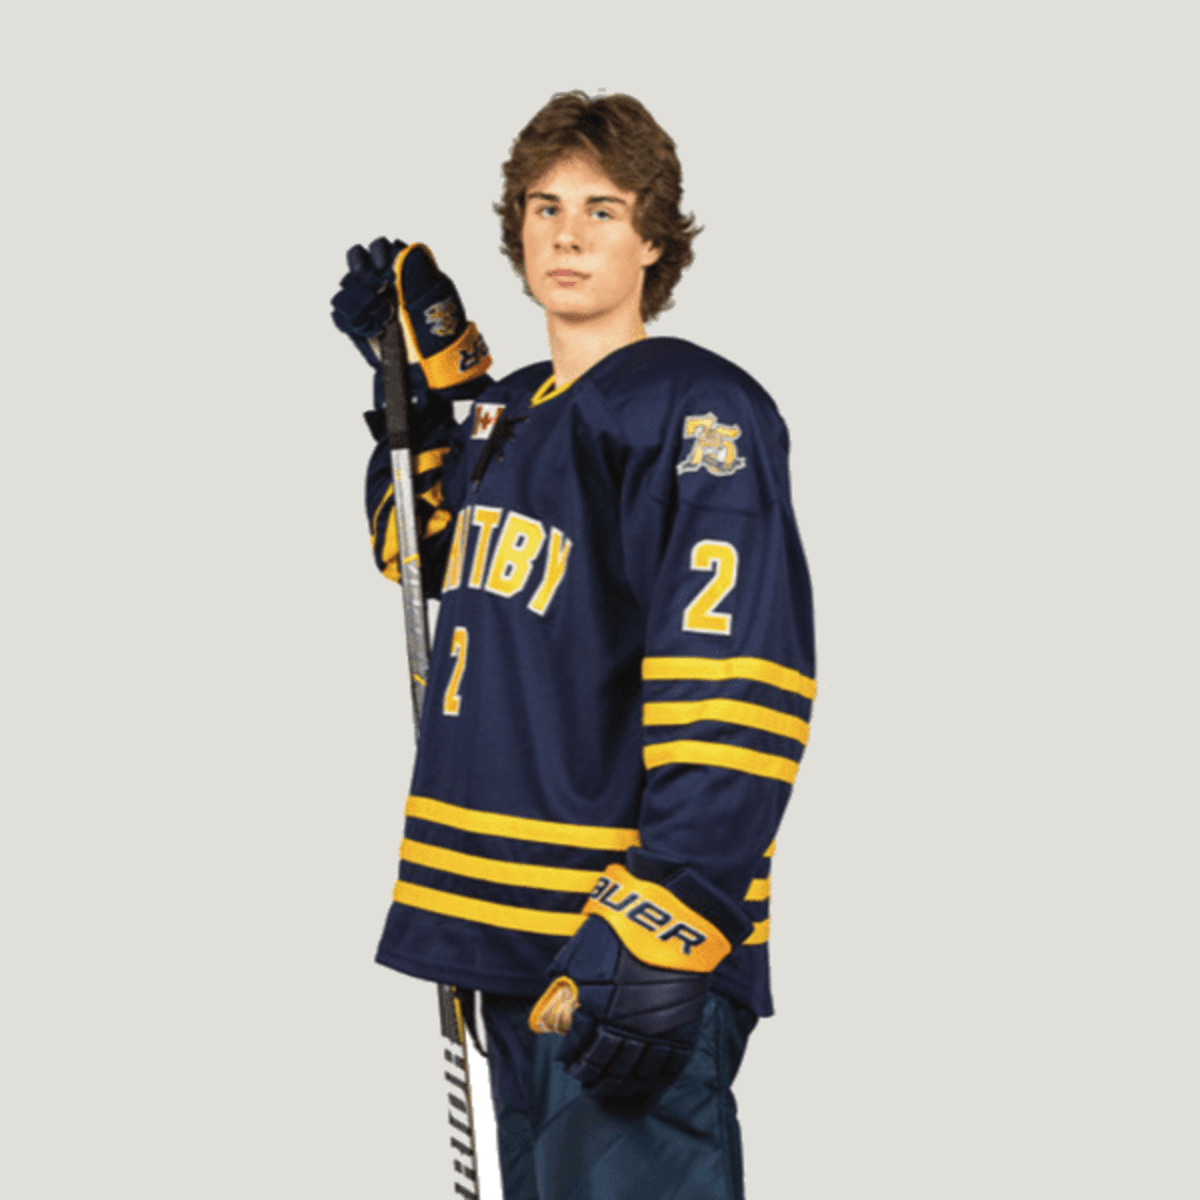 Owen Brady: Cancer survivor and, finally, a hockey player again